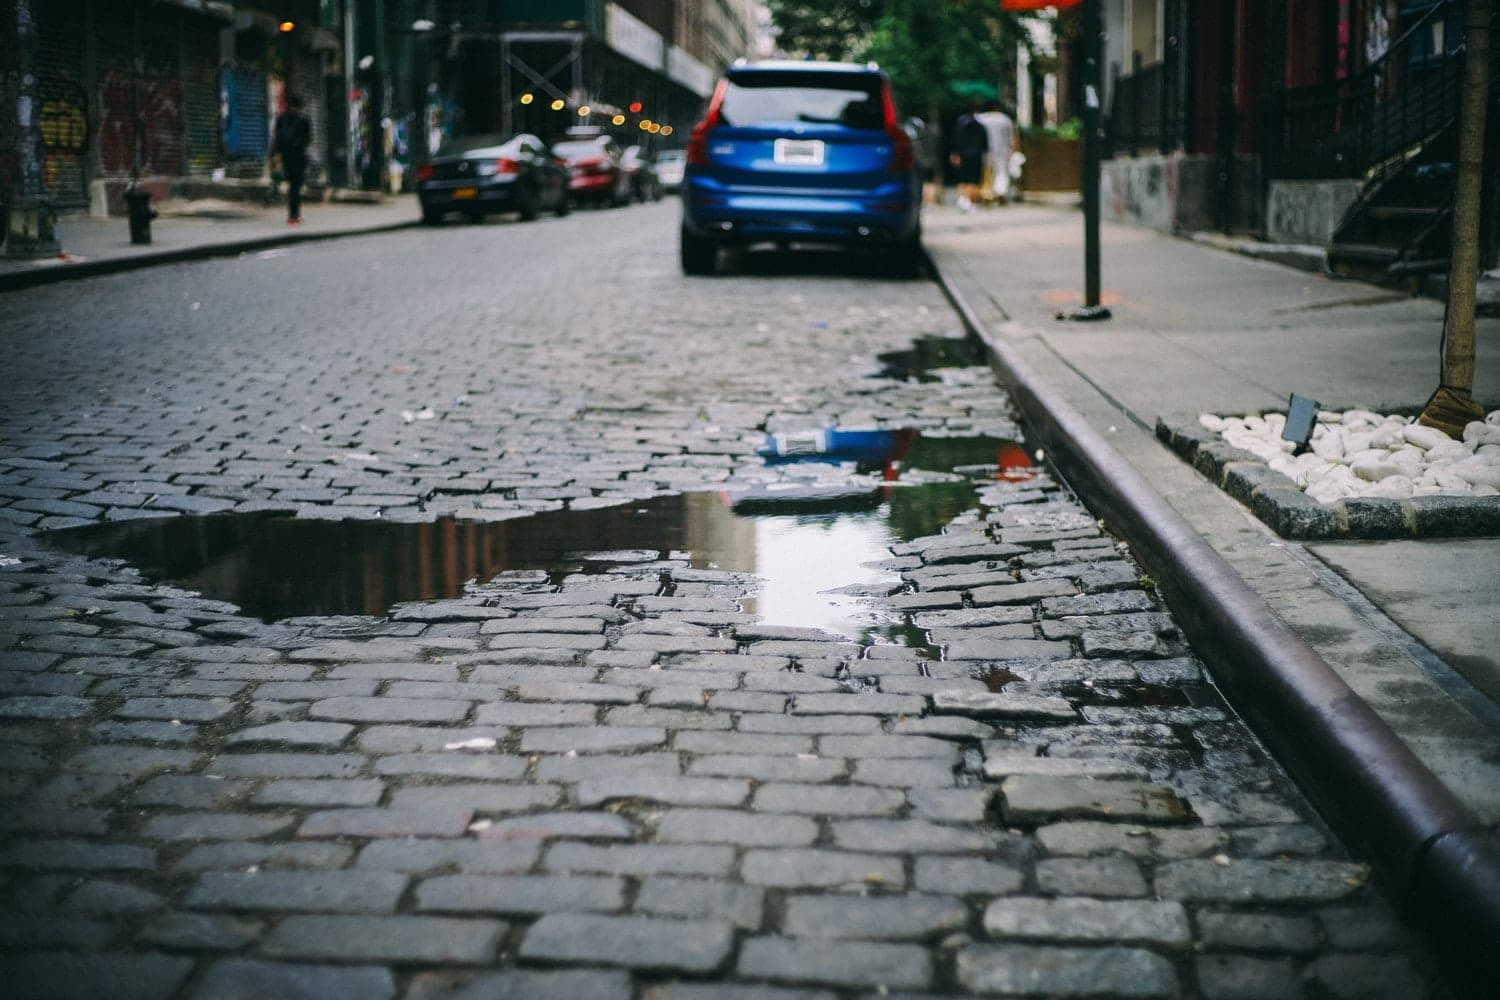 A pothole on a cobblestone road